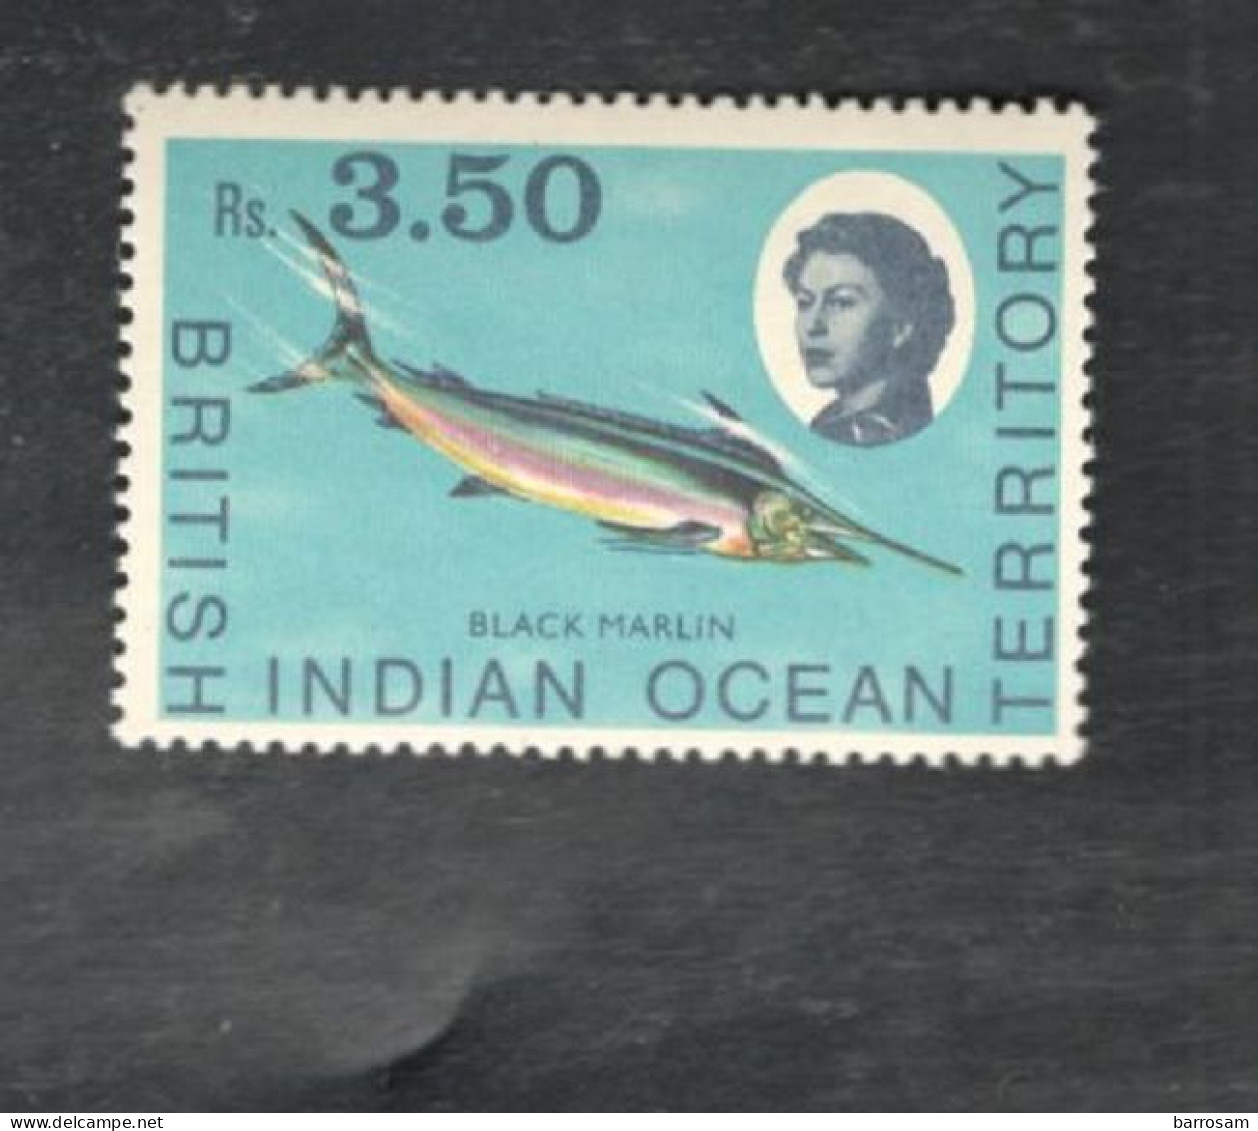 BRITISH INDIAN OCEAN TERRITORY....1968:Michel 28mnh** - British Indian Ocean Territory (BIOT)